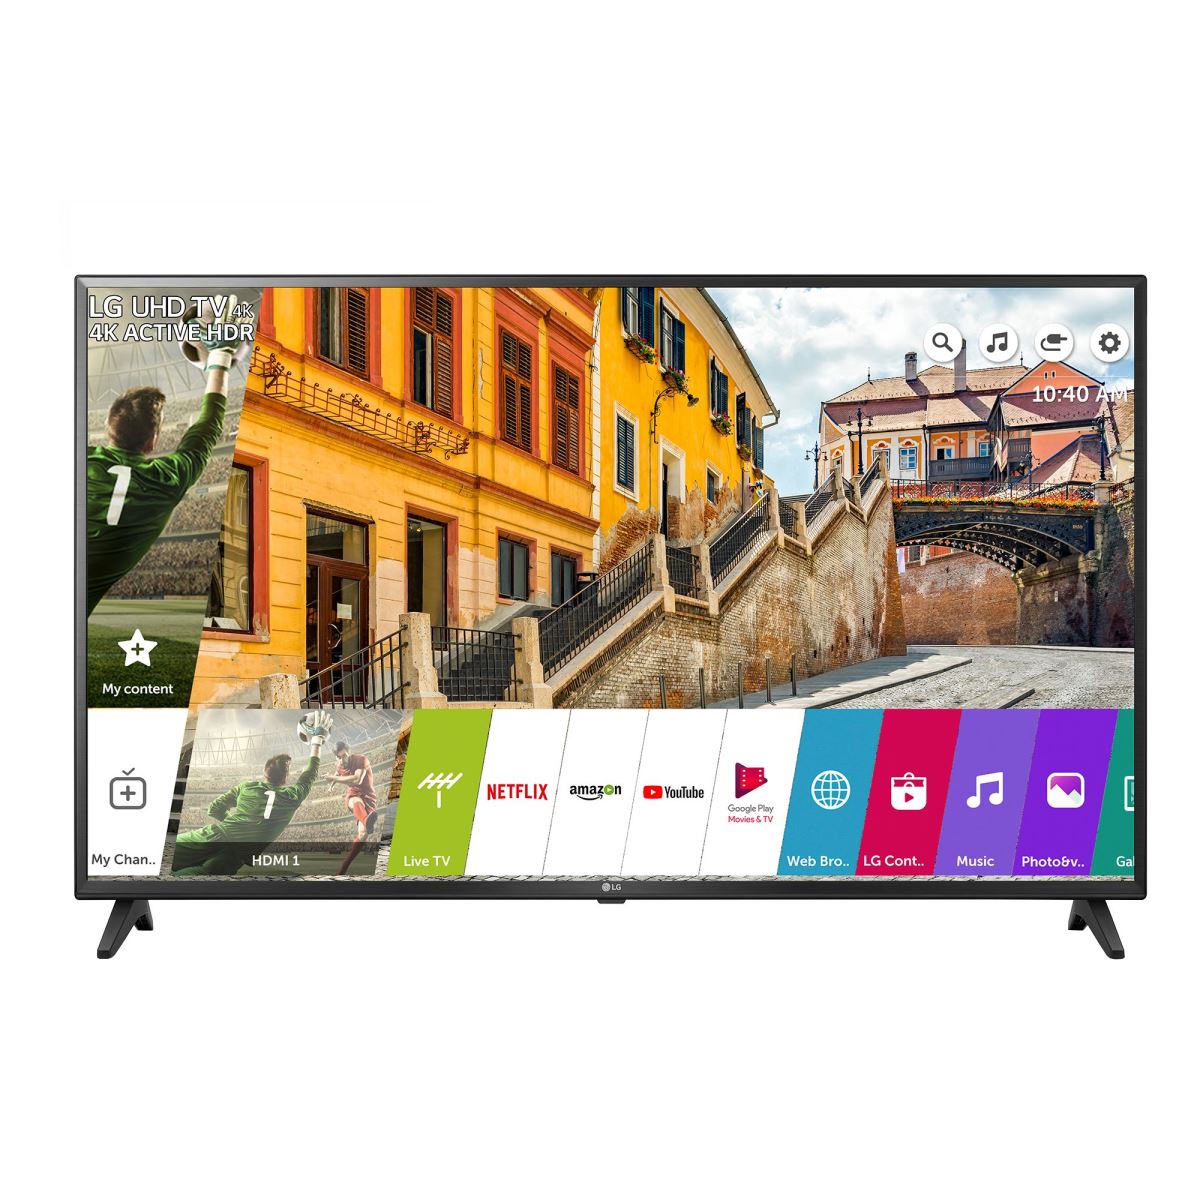 Televizor LED LG 43UK6200PLA, 108 cm, Smart TV, 4K Ultra HD, Bluetooth, Wi-Fi, Negru